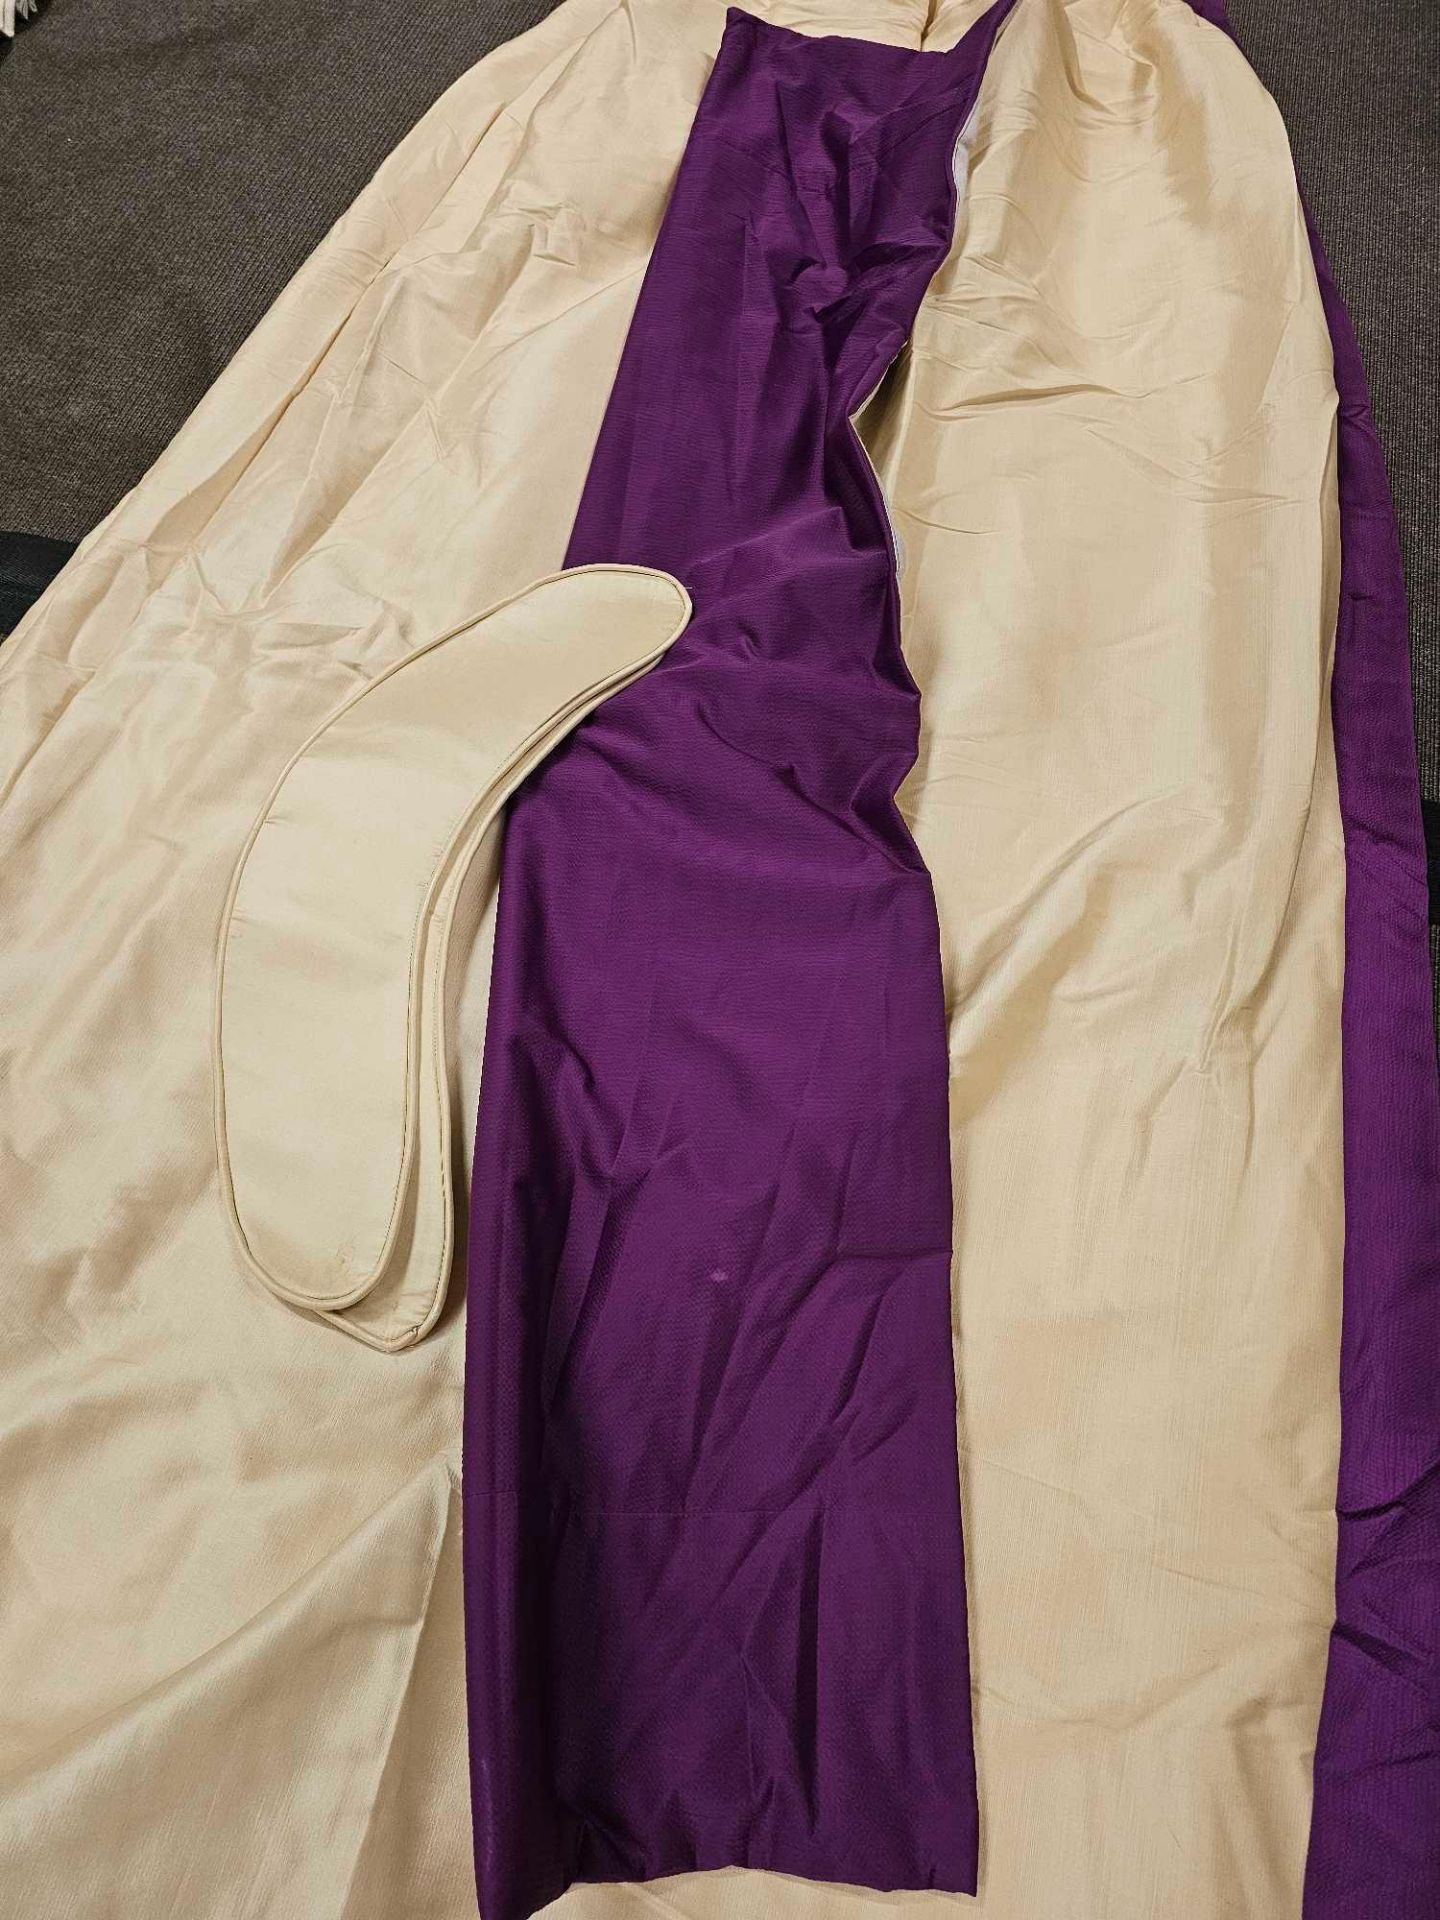 A Pair Silk Drapes Cream Purple Striped Edge Tie Backs And Canopy Size -cm 224 x 238 Ref Dorch 70 - Image 4 of 4